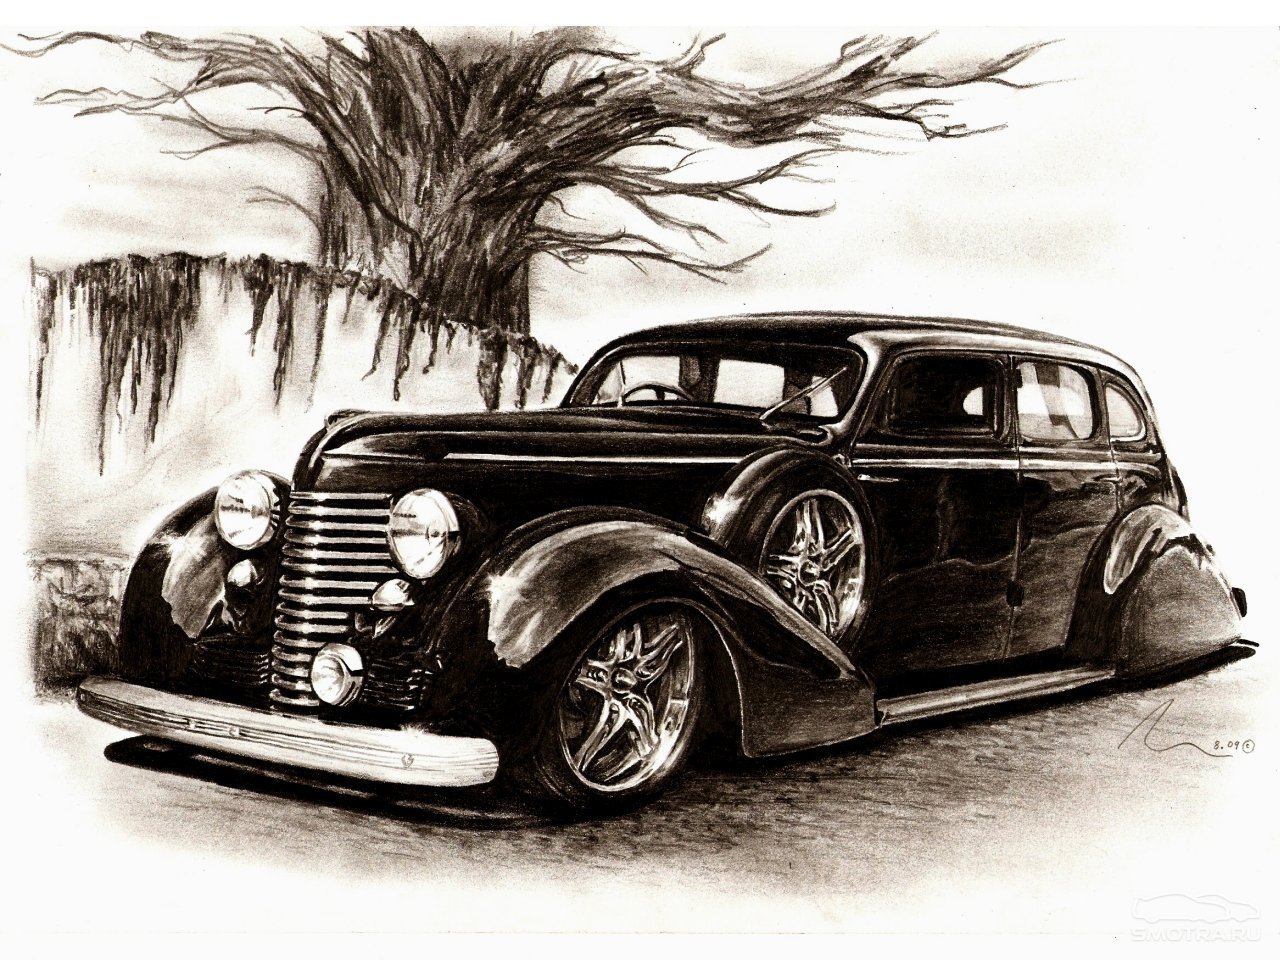 Машина рисунок графика. Автомобиль рисунок. Автомобиль карандашом. Рисунок автомобиля карандашом. Старинные автомобили Графика.